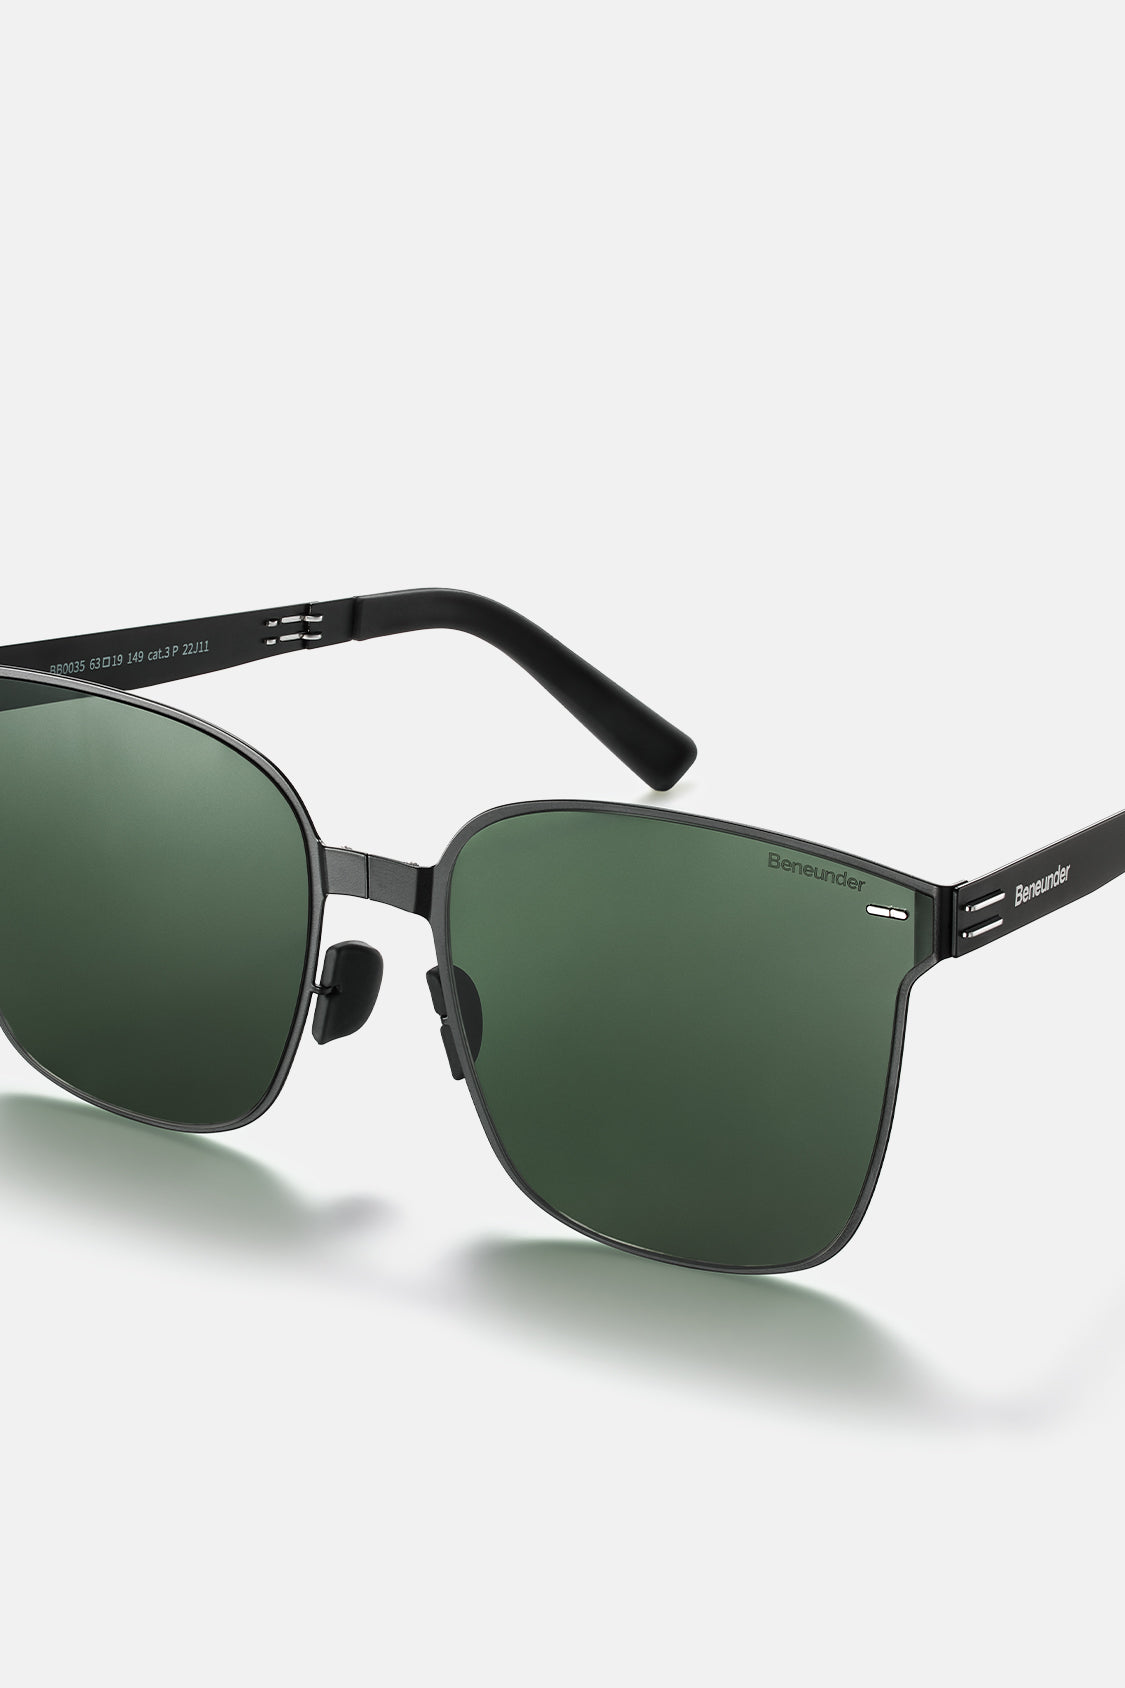 beneunder men's slimline polarized folding sunglasses shades #color_forest green